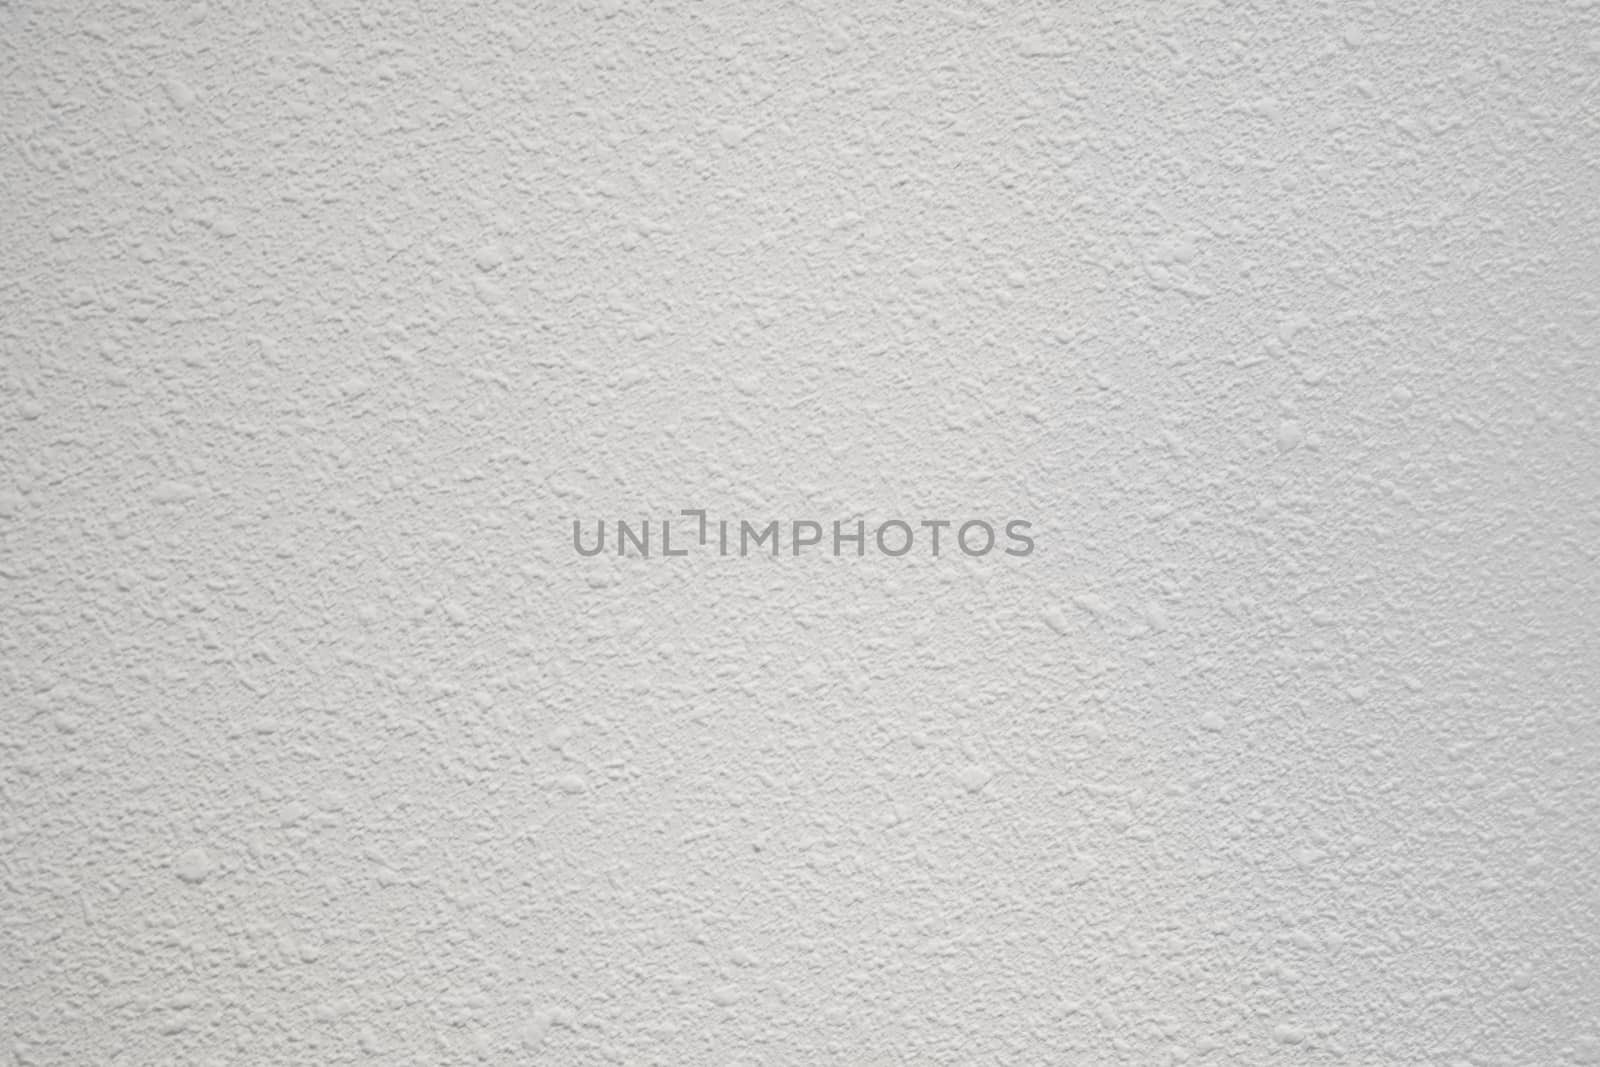 White color wallpaper with uneven falt skin texture